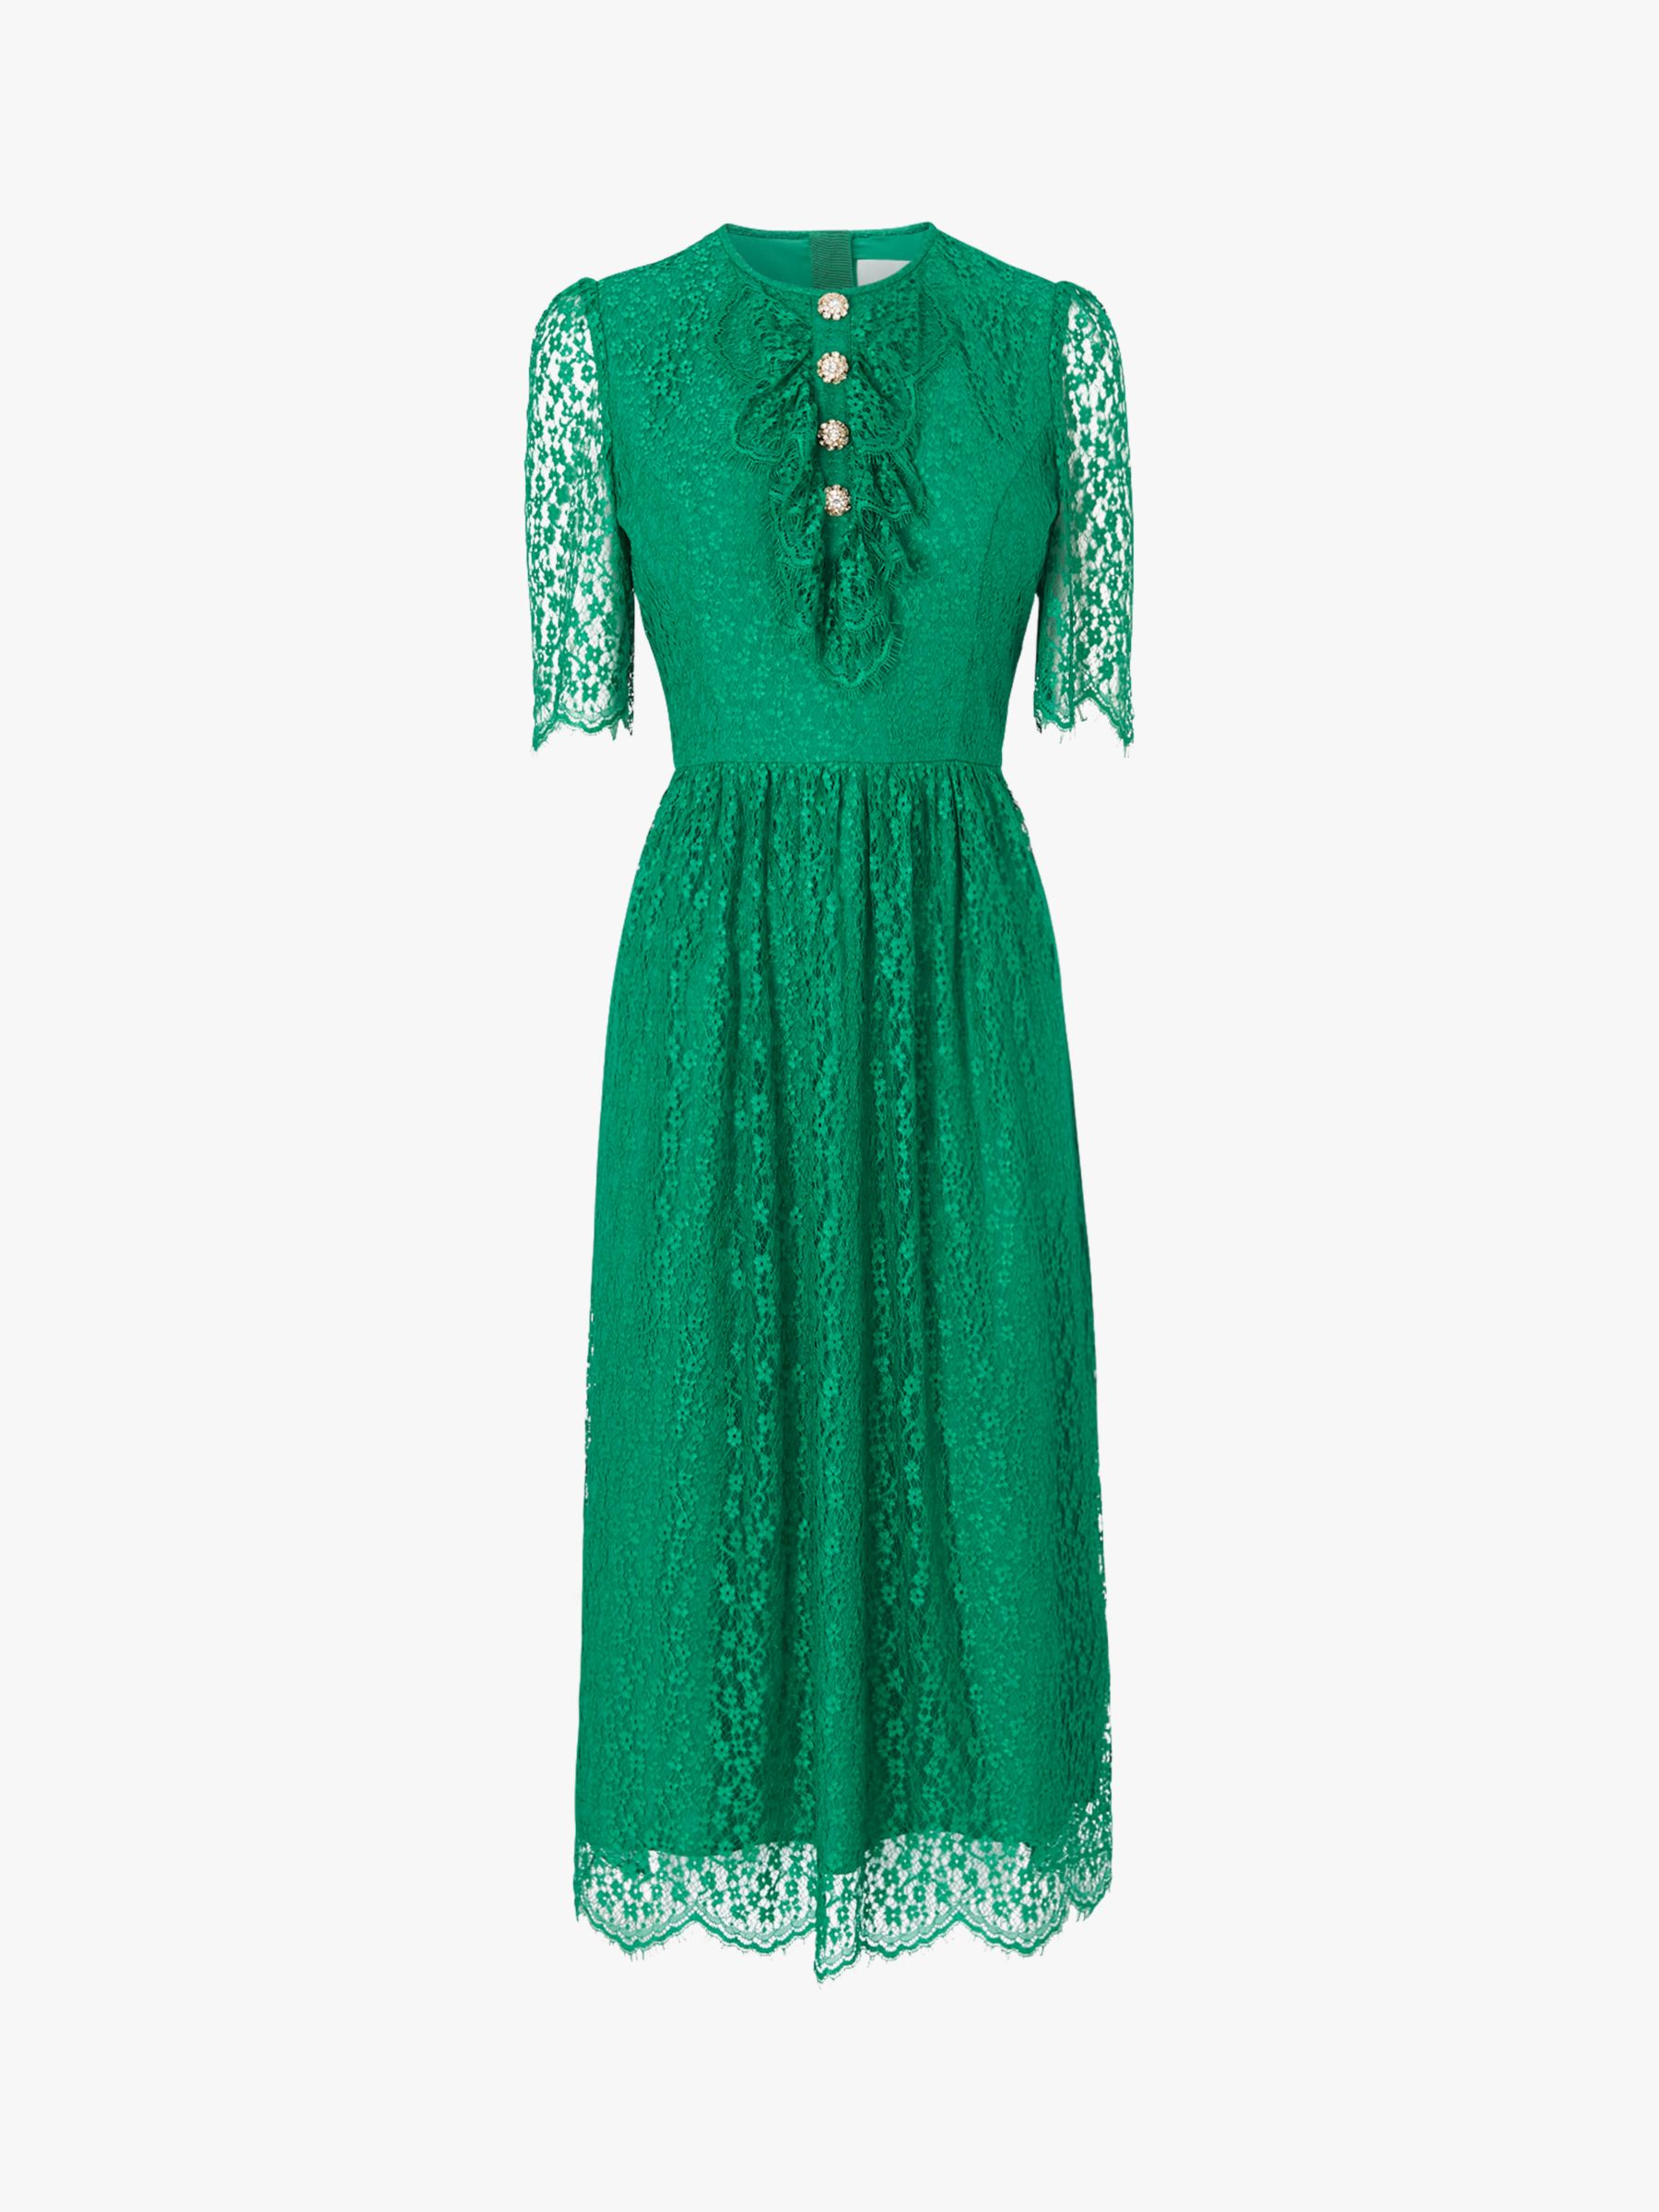 L.K.Bennett Mallory Lace Bow Tea Dress, Fern Green